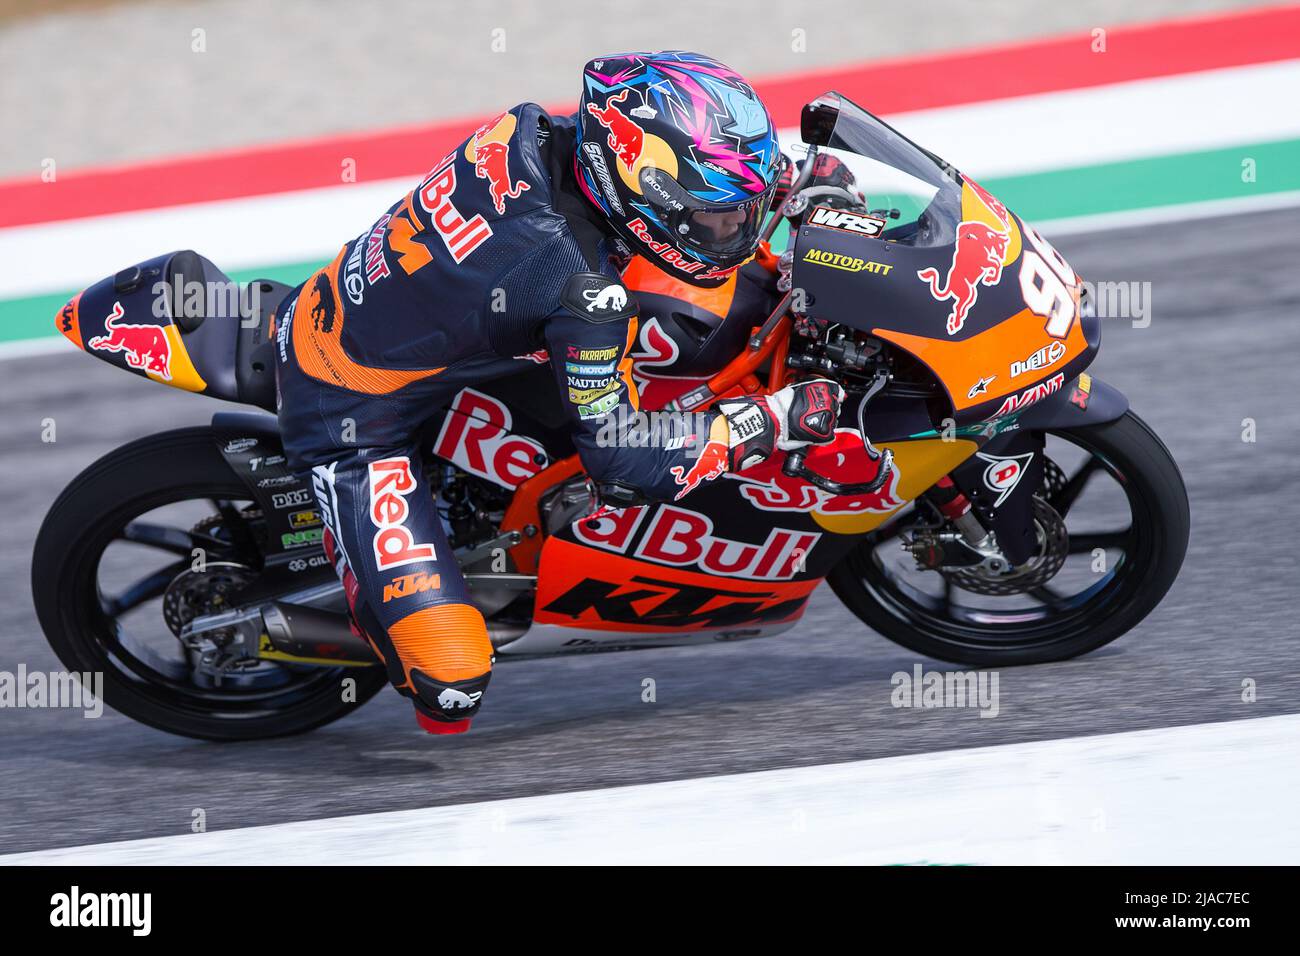 96 Holgado Daniel (Red Bull Ktm Ajo) Moto3 during the MotoGP World Championship Gran Premio dItalia Oakley Race Moto2, Moto3 on May 29, 2022 at the Mugello International Circuit in Mugello, Italy (